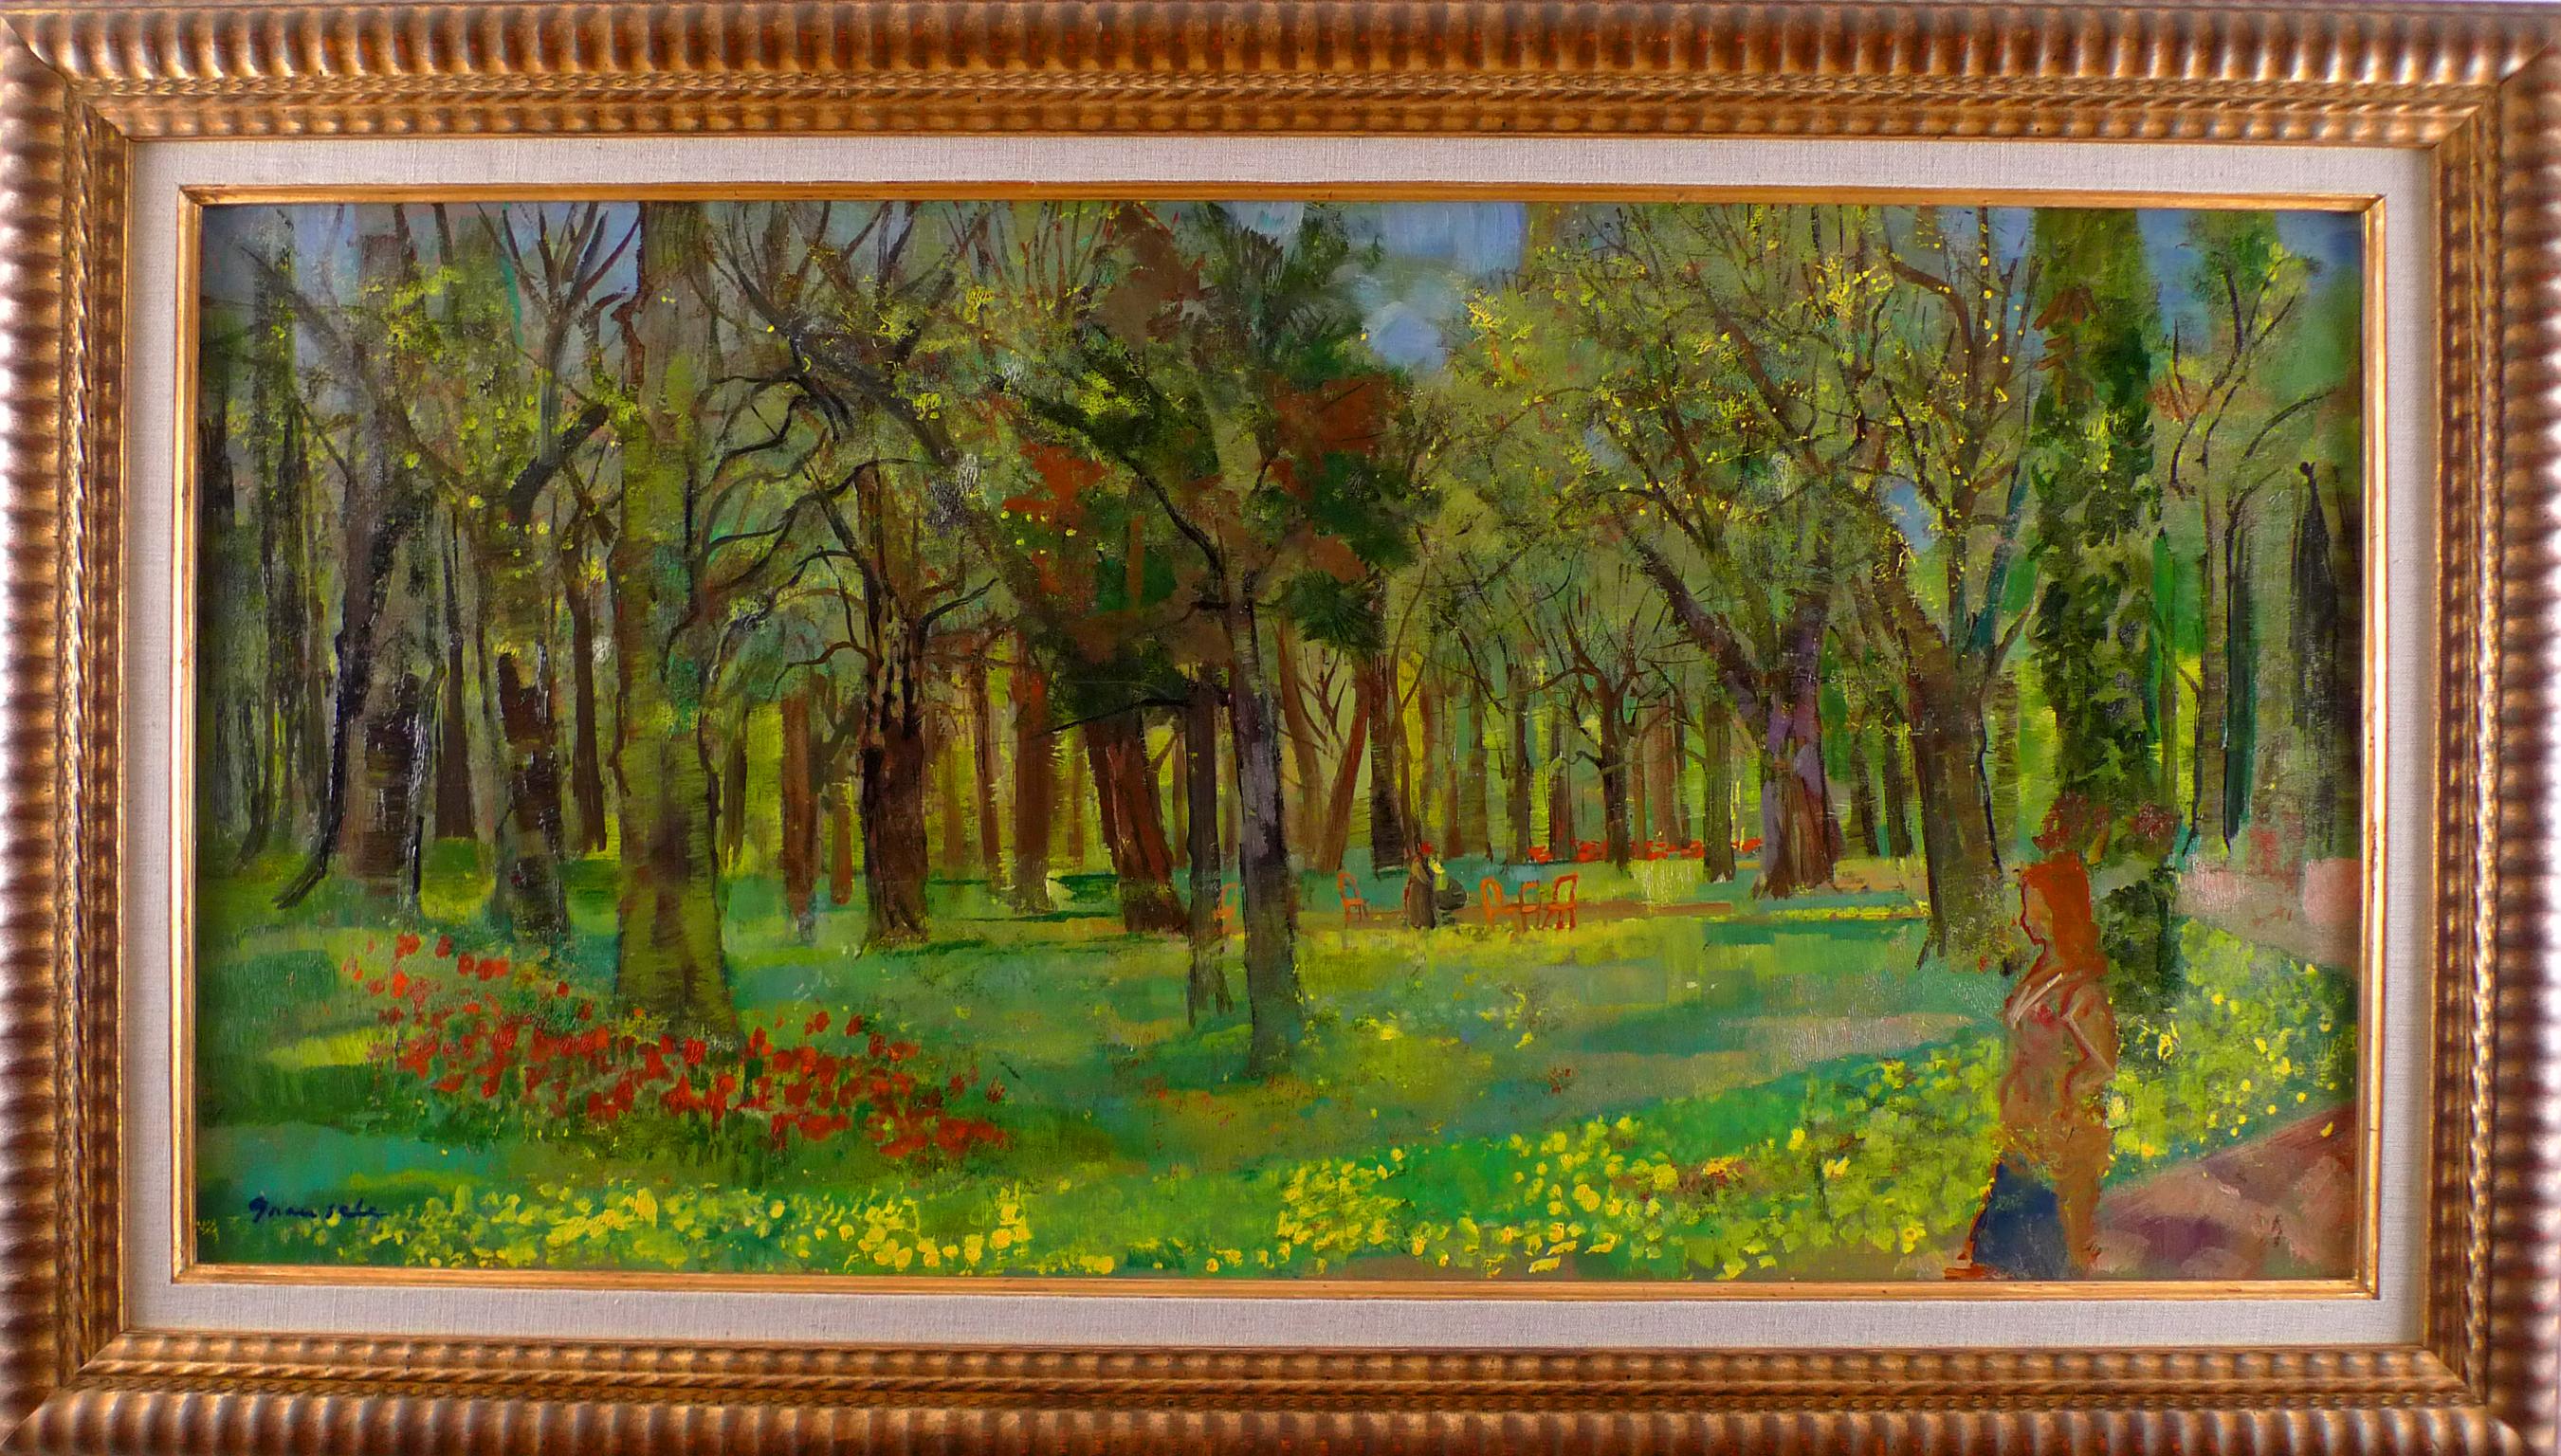 Emilio Grau Sala Figurative Painting - "Spring in Bagatelle", 20th Century Oil on Canvas by Spanish Artist E. Grau Sala